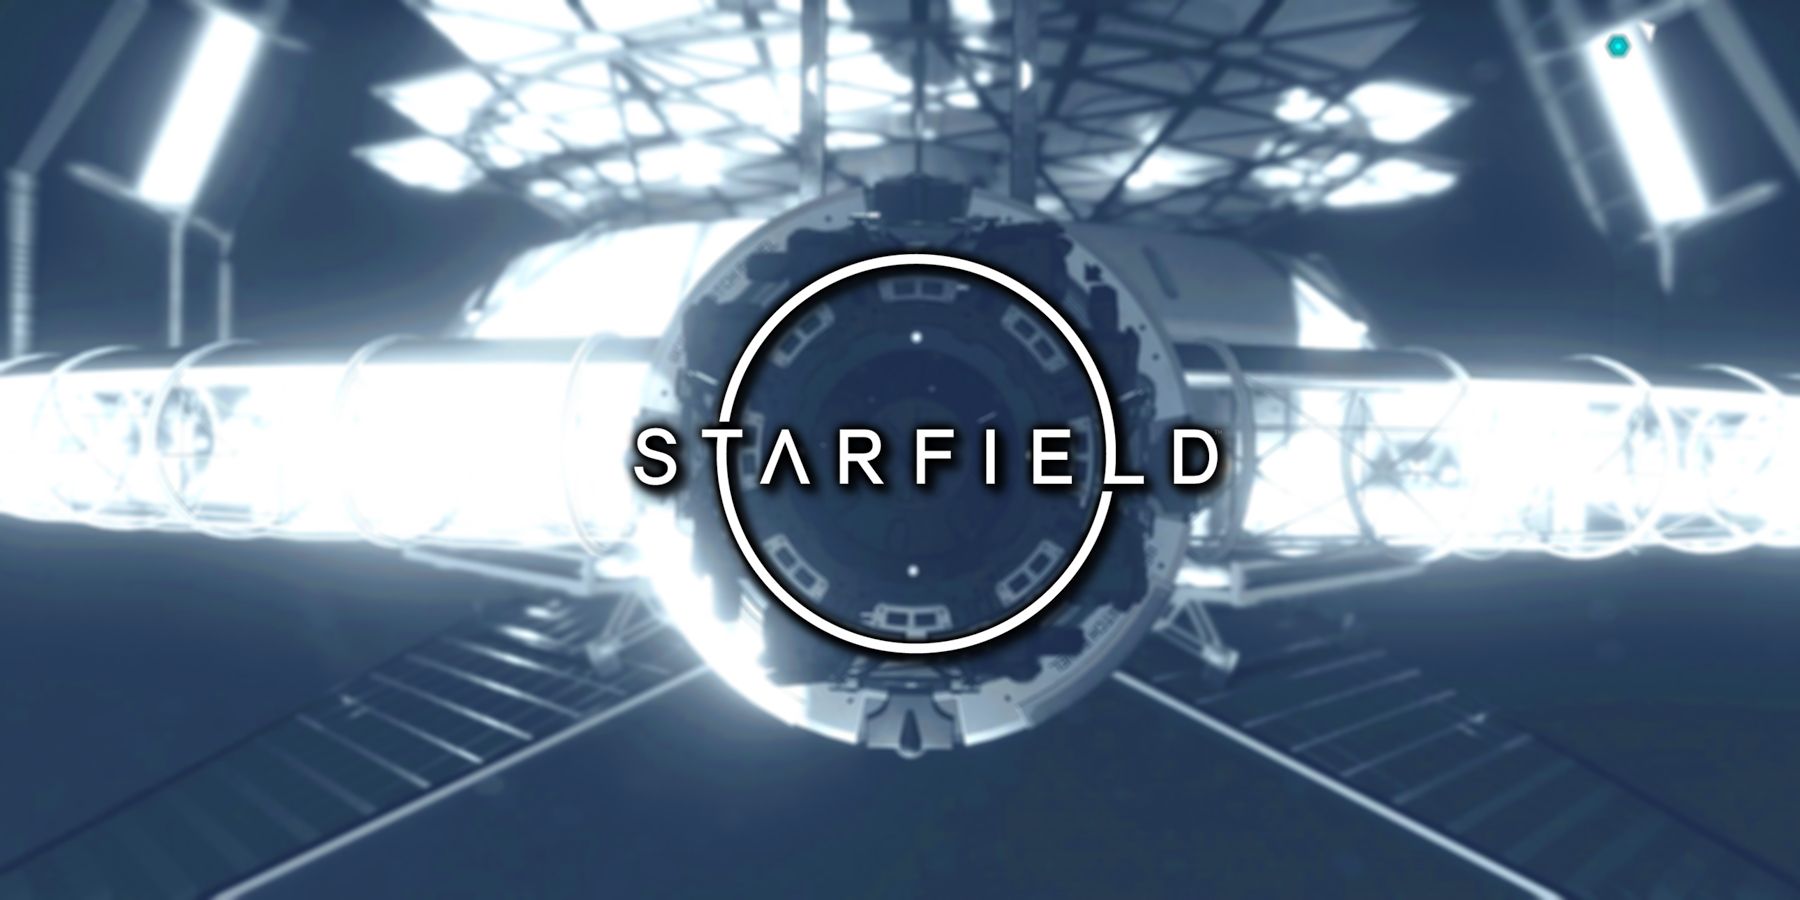 Starfield logo over docking sequence screenshot